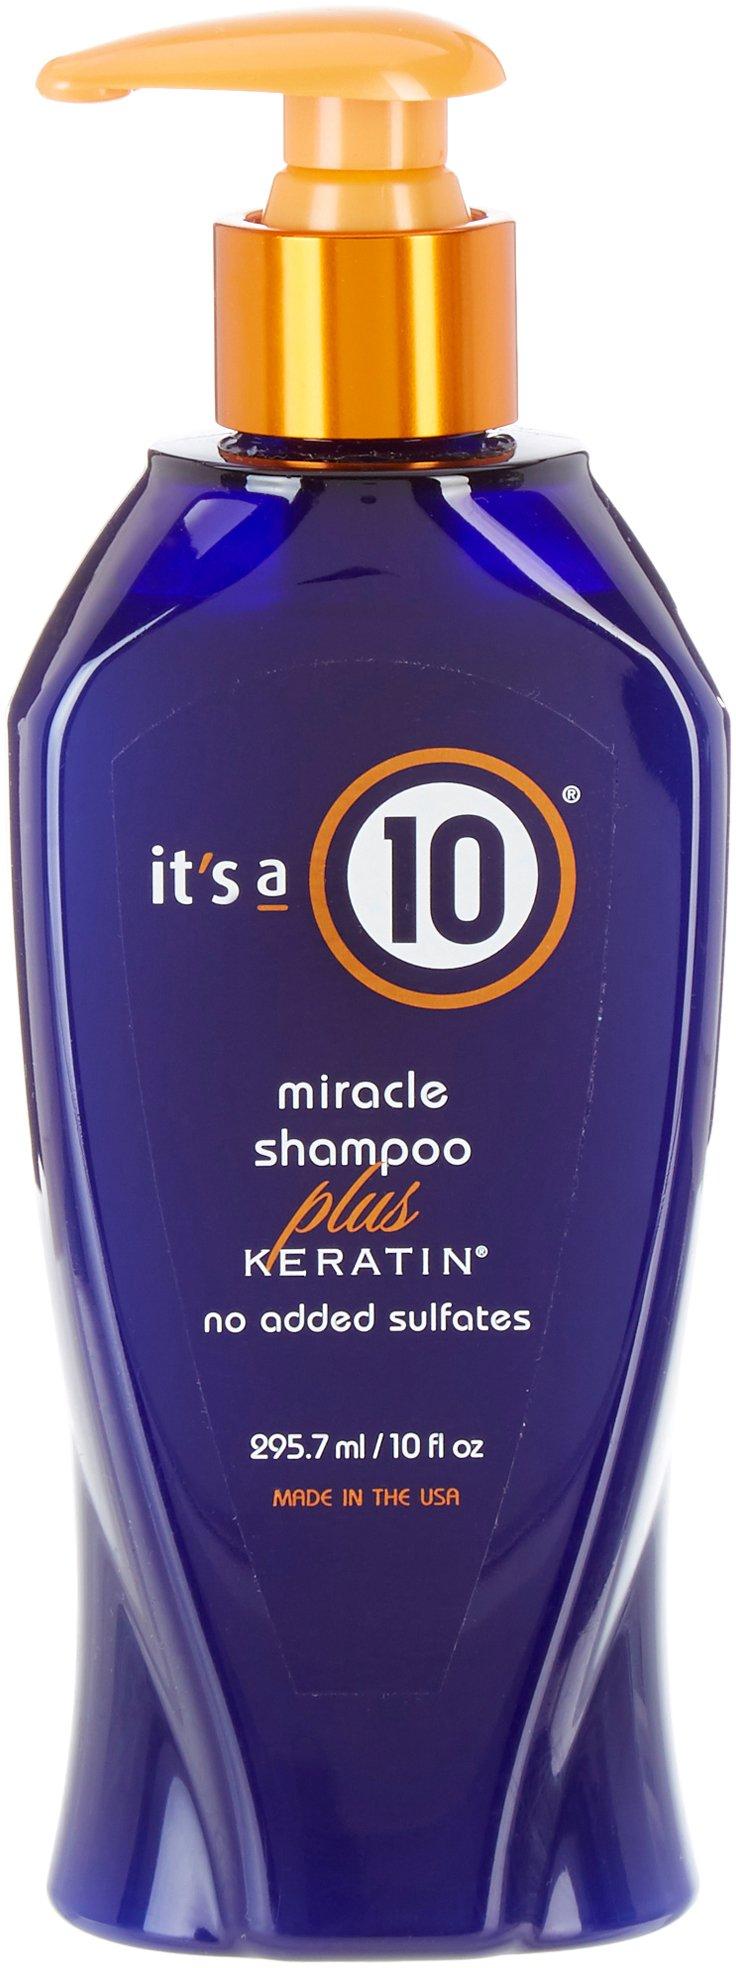 It's A 10 10 oz Miracle Shampoo Plus